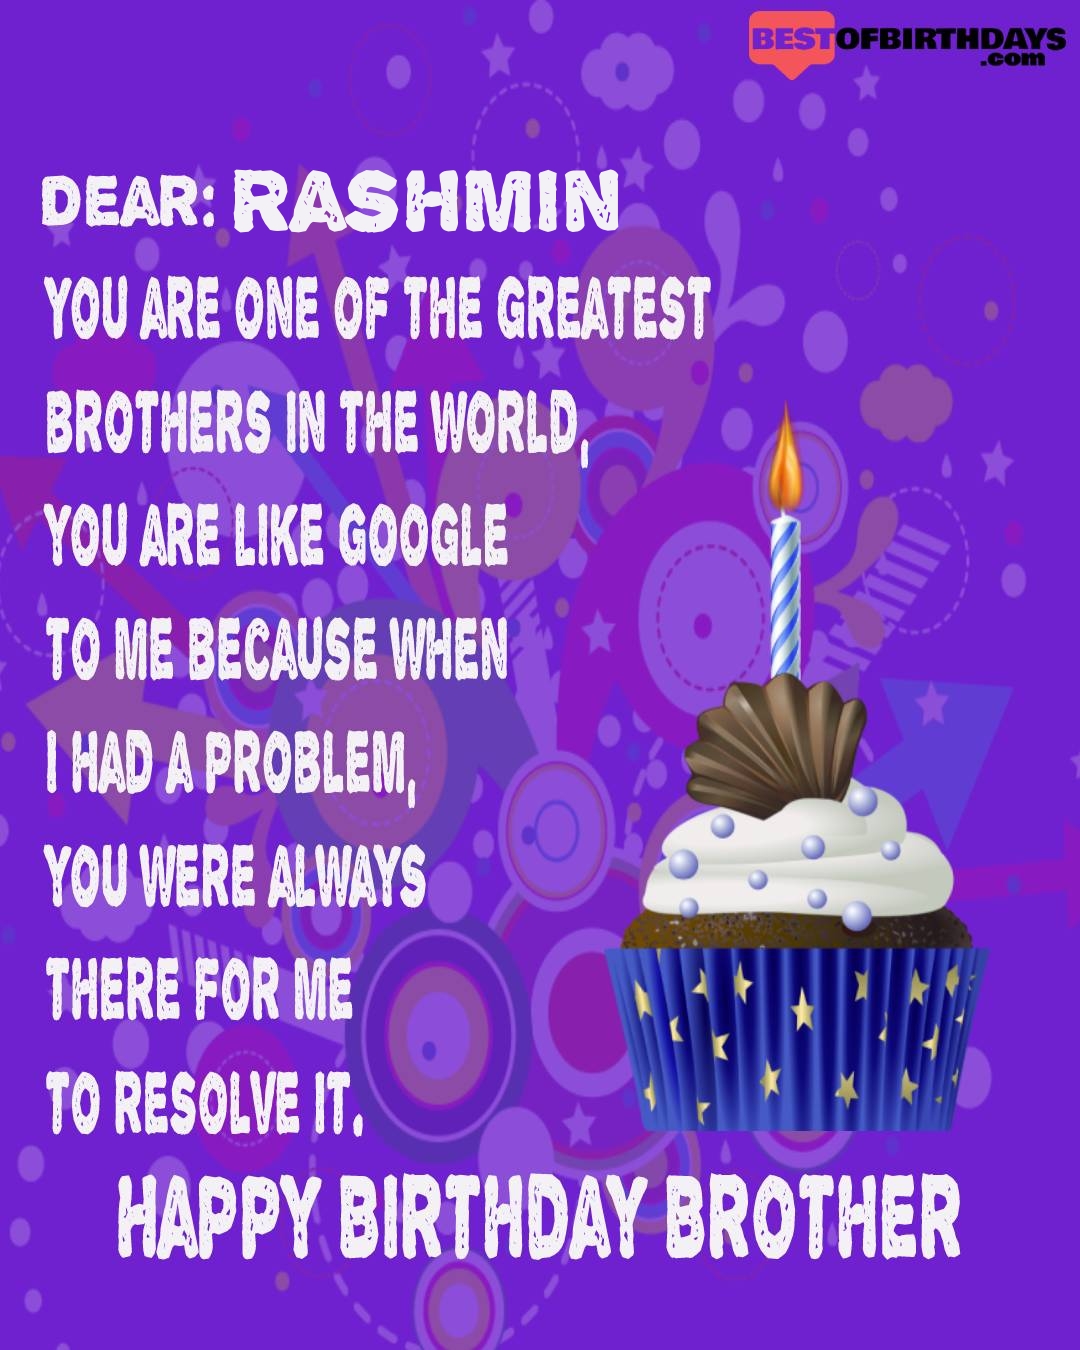 Happy birthday rashmin bhai brother bro